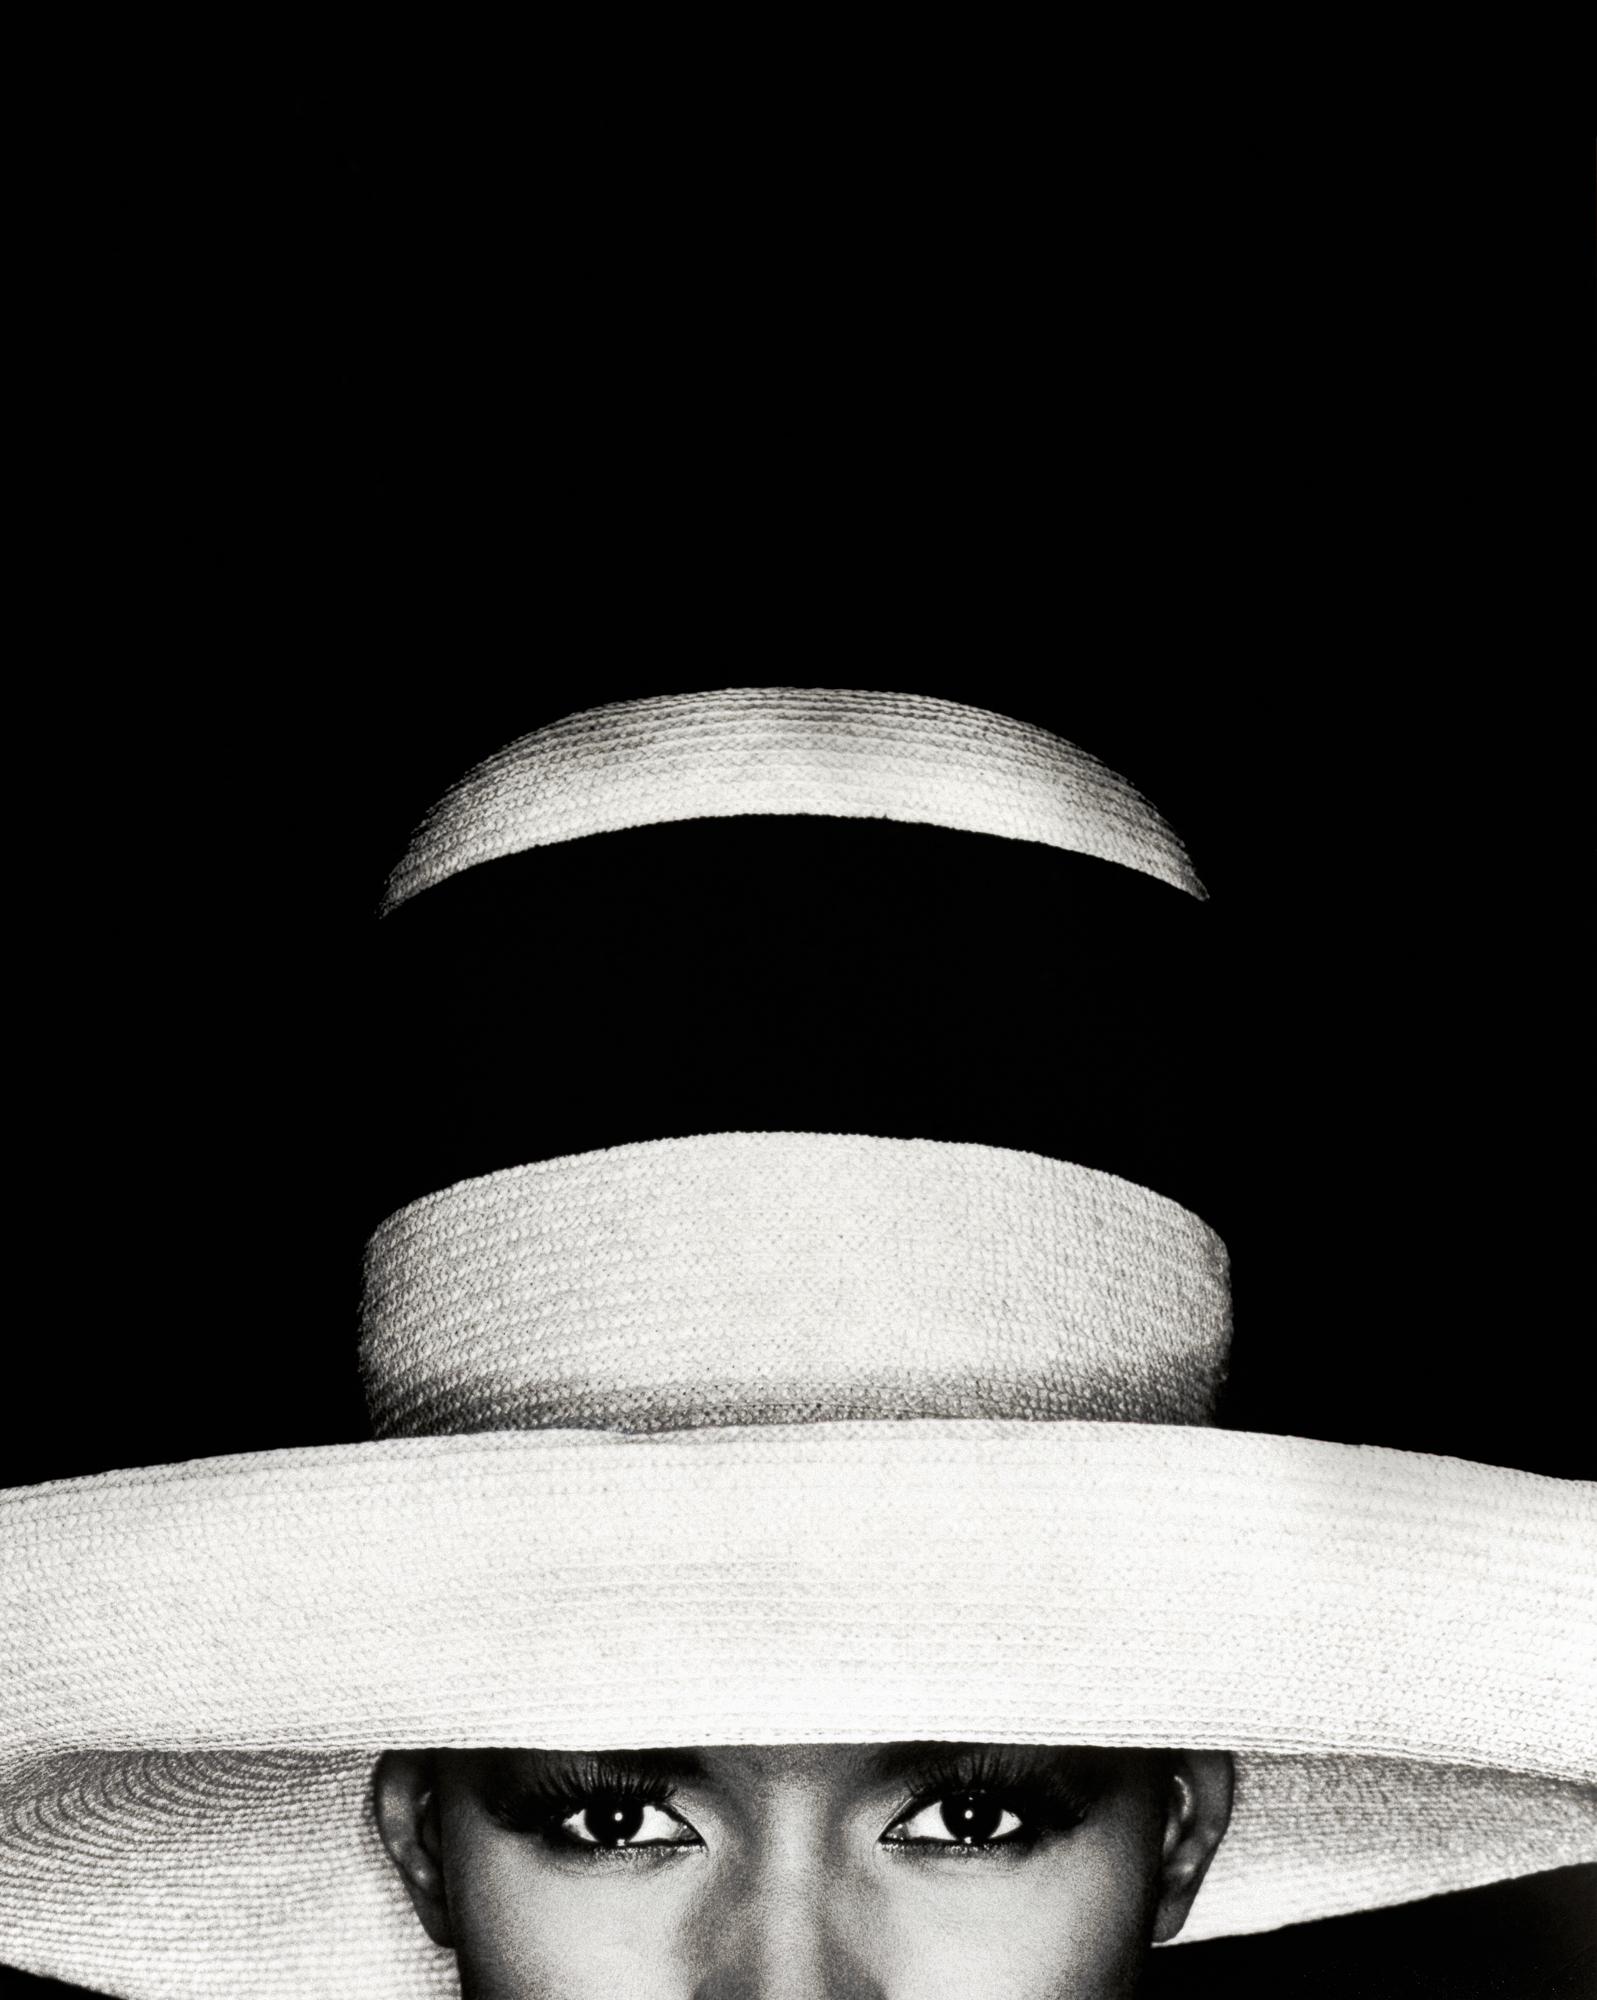 Grace Jones in hat, Los Angeles, 21st Century, Contemporary, Celebrity